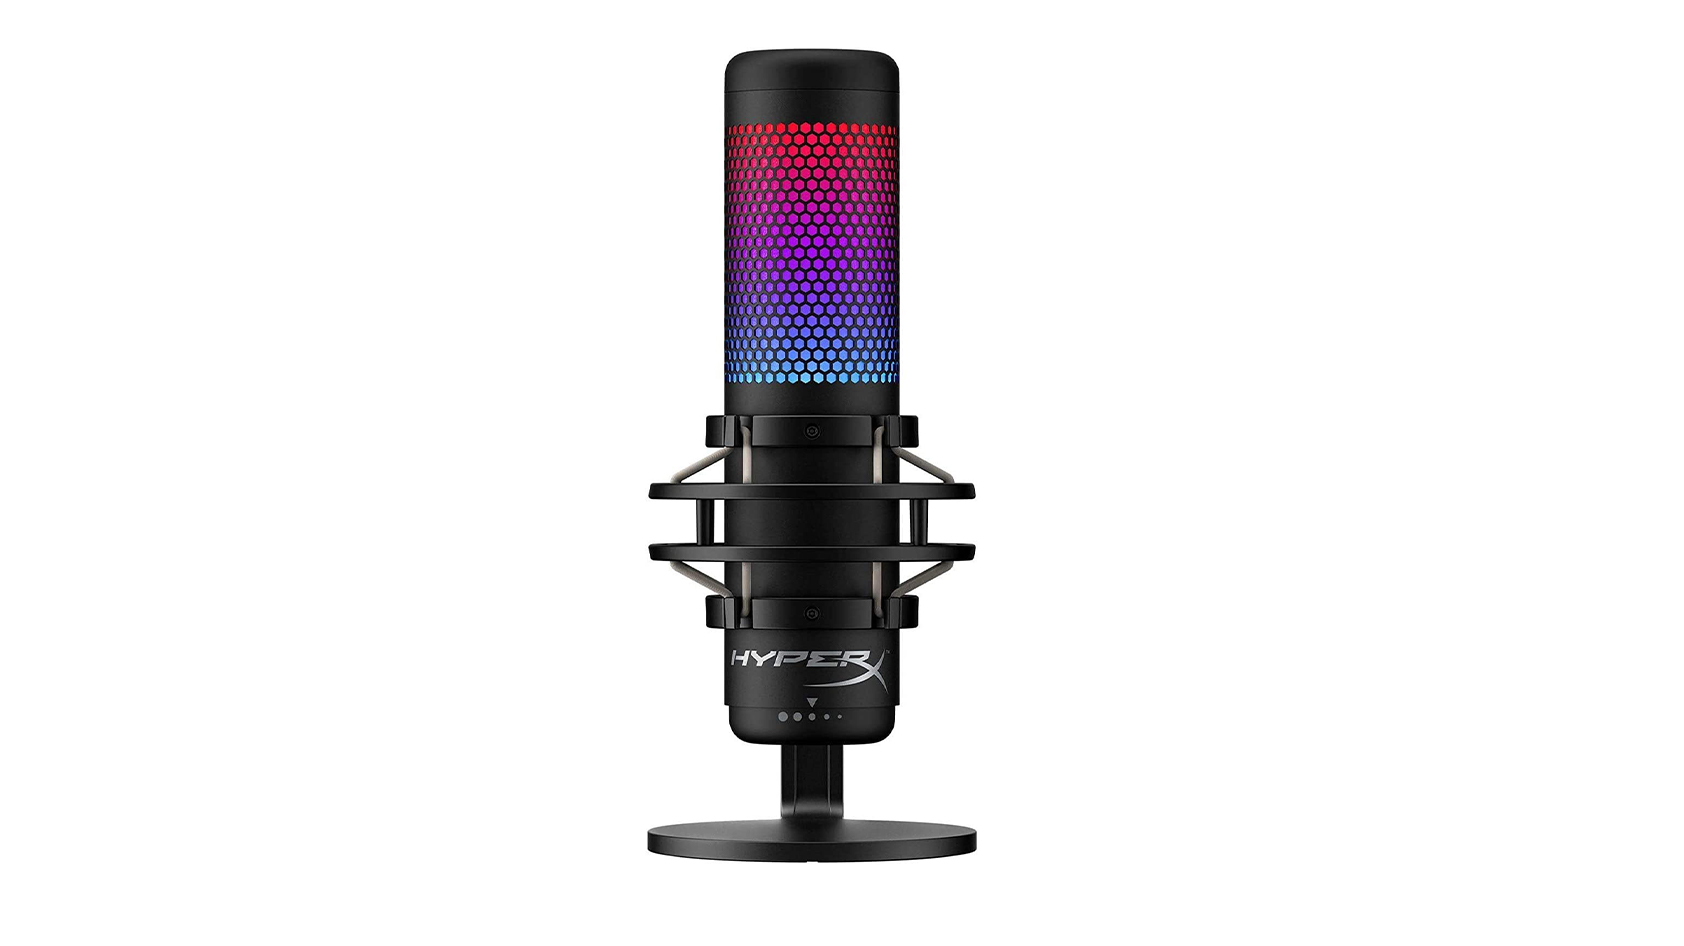 https://www.soundguys.com/wp-content/uploads/2020/11/HyperX-QuadCast-S-microphone-product-image.jpg